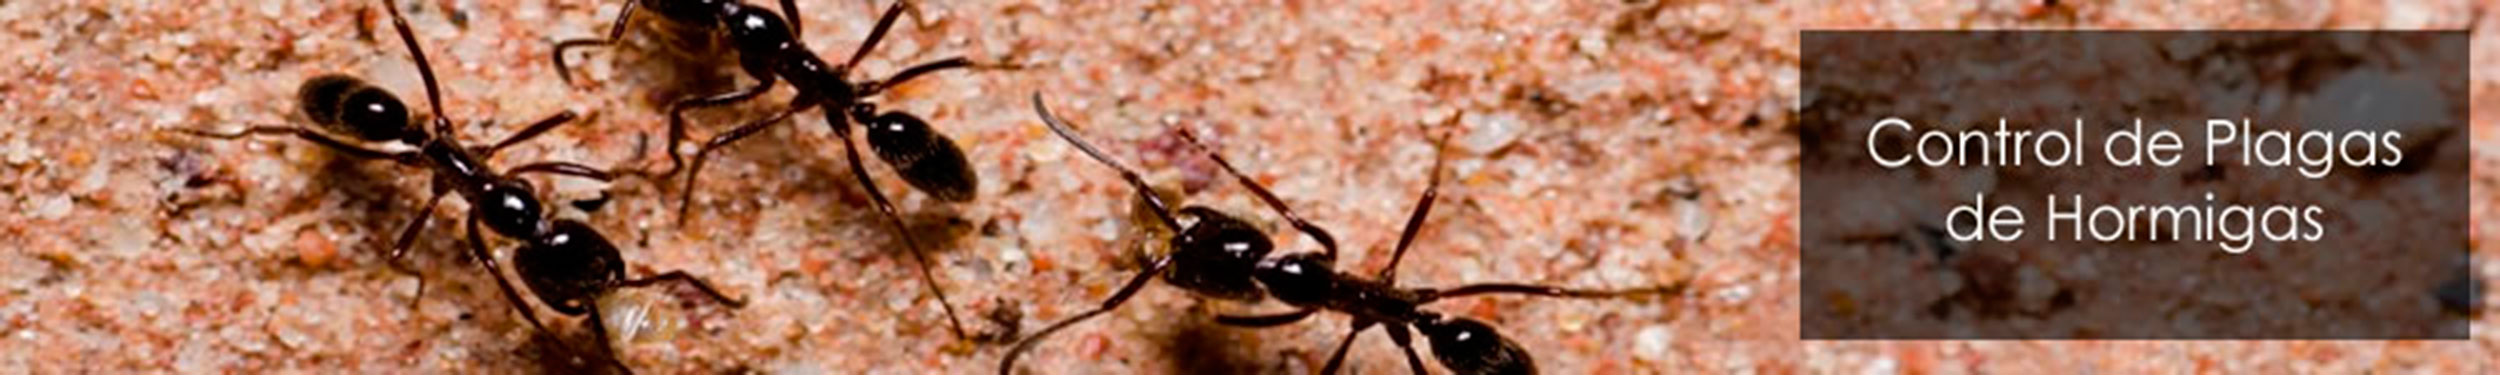 Empresa de control de plagas hormigas